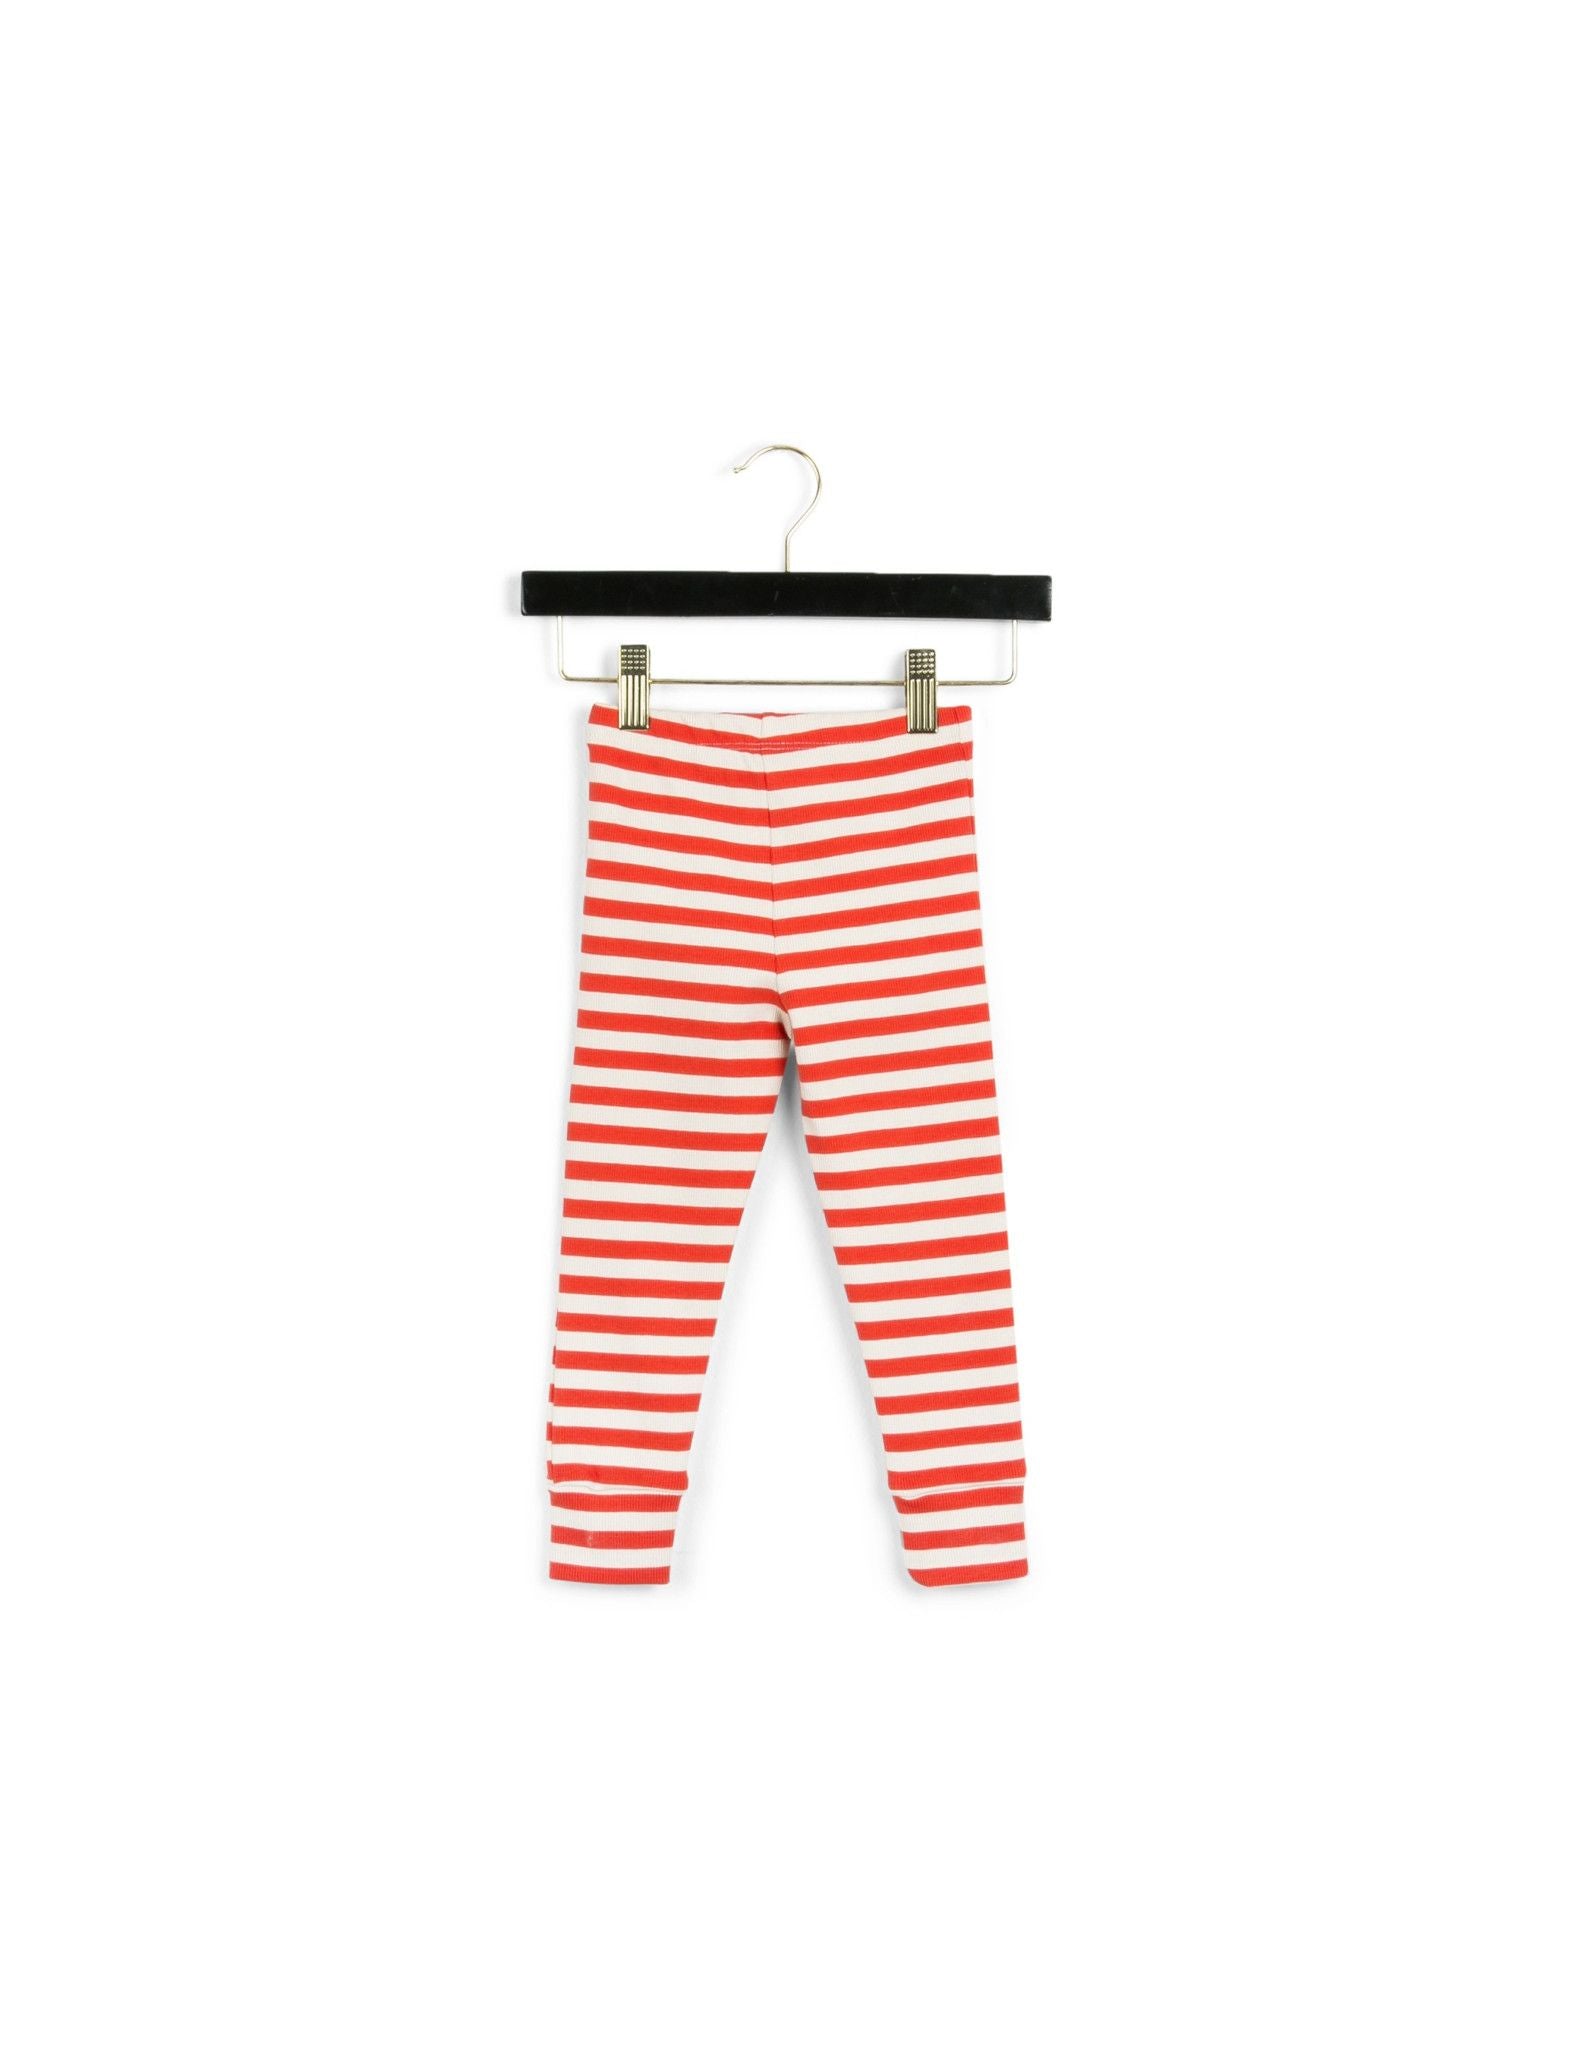 Stripe Rib Red Leggings - CÉMAROSE | Children's Fashion Store - 2